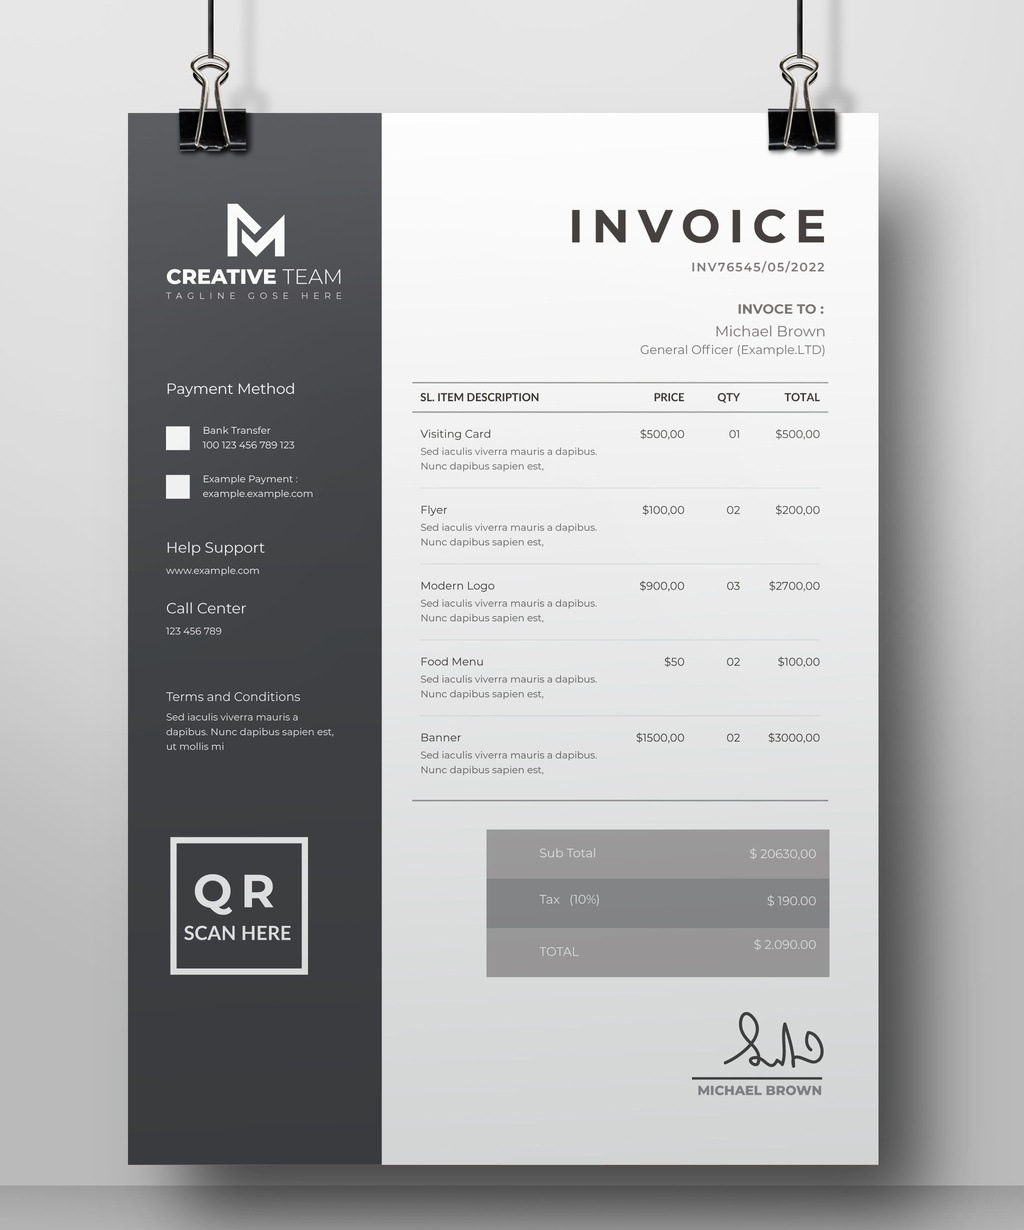 Invoice Design Layout (AI Format)